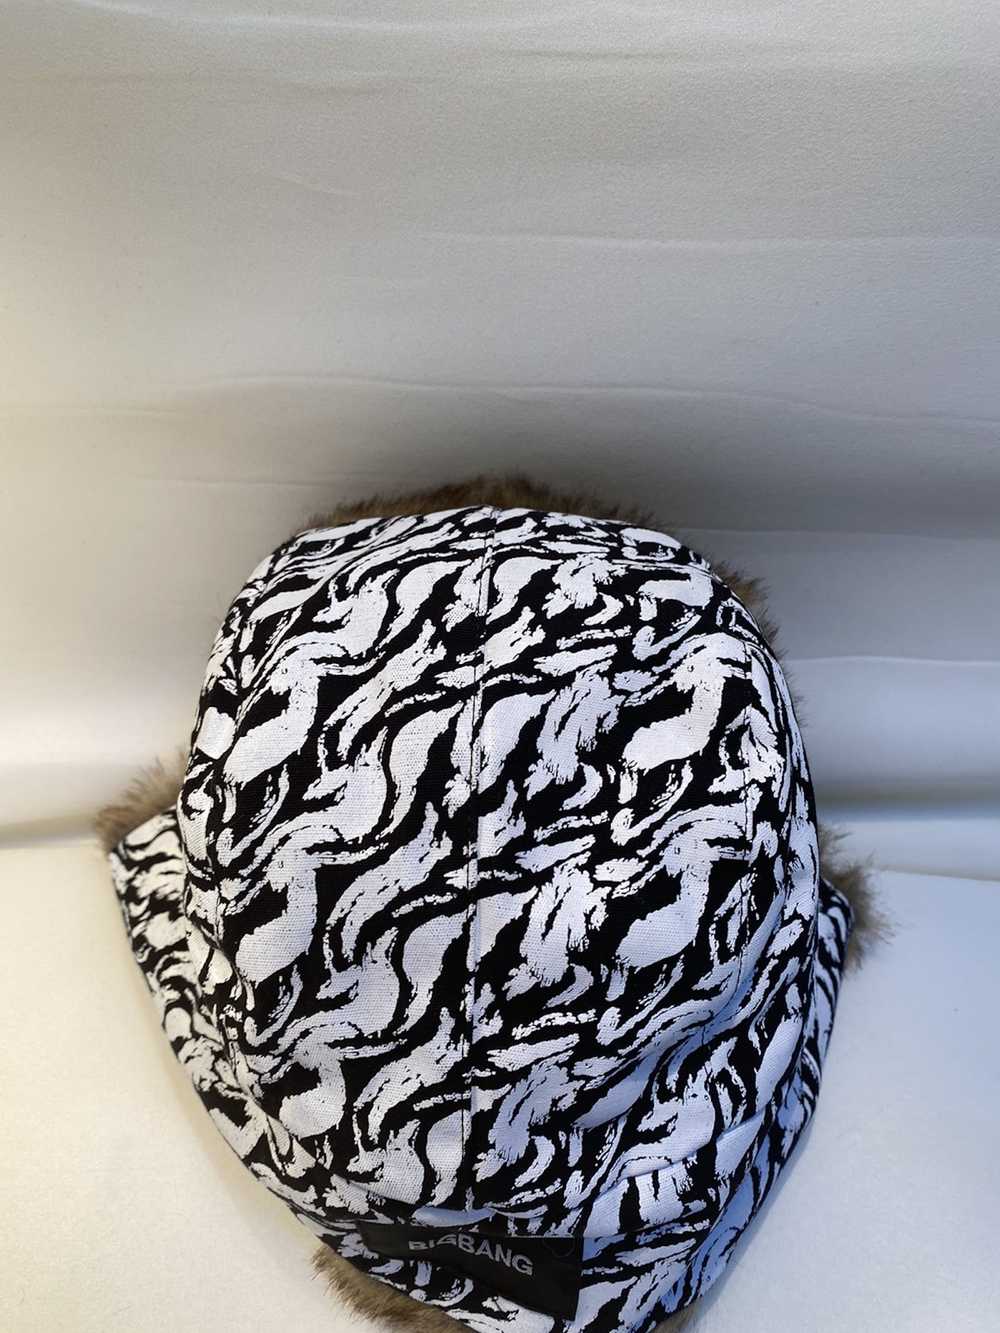 Japanese Brand Big bang winter hat - image 7